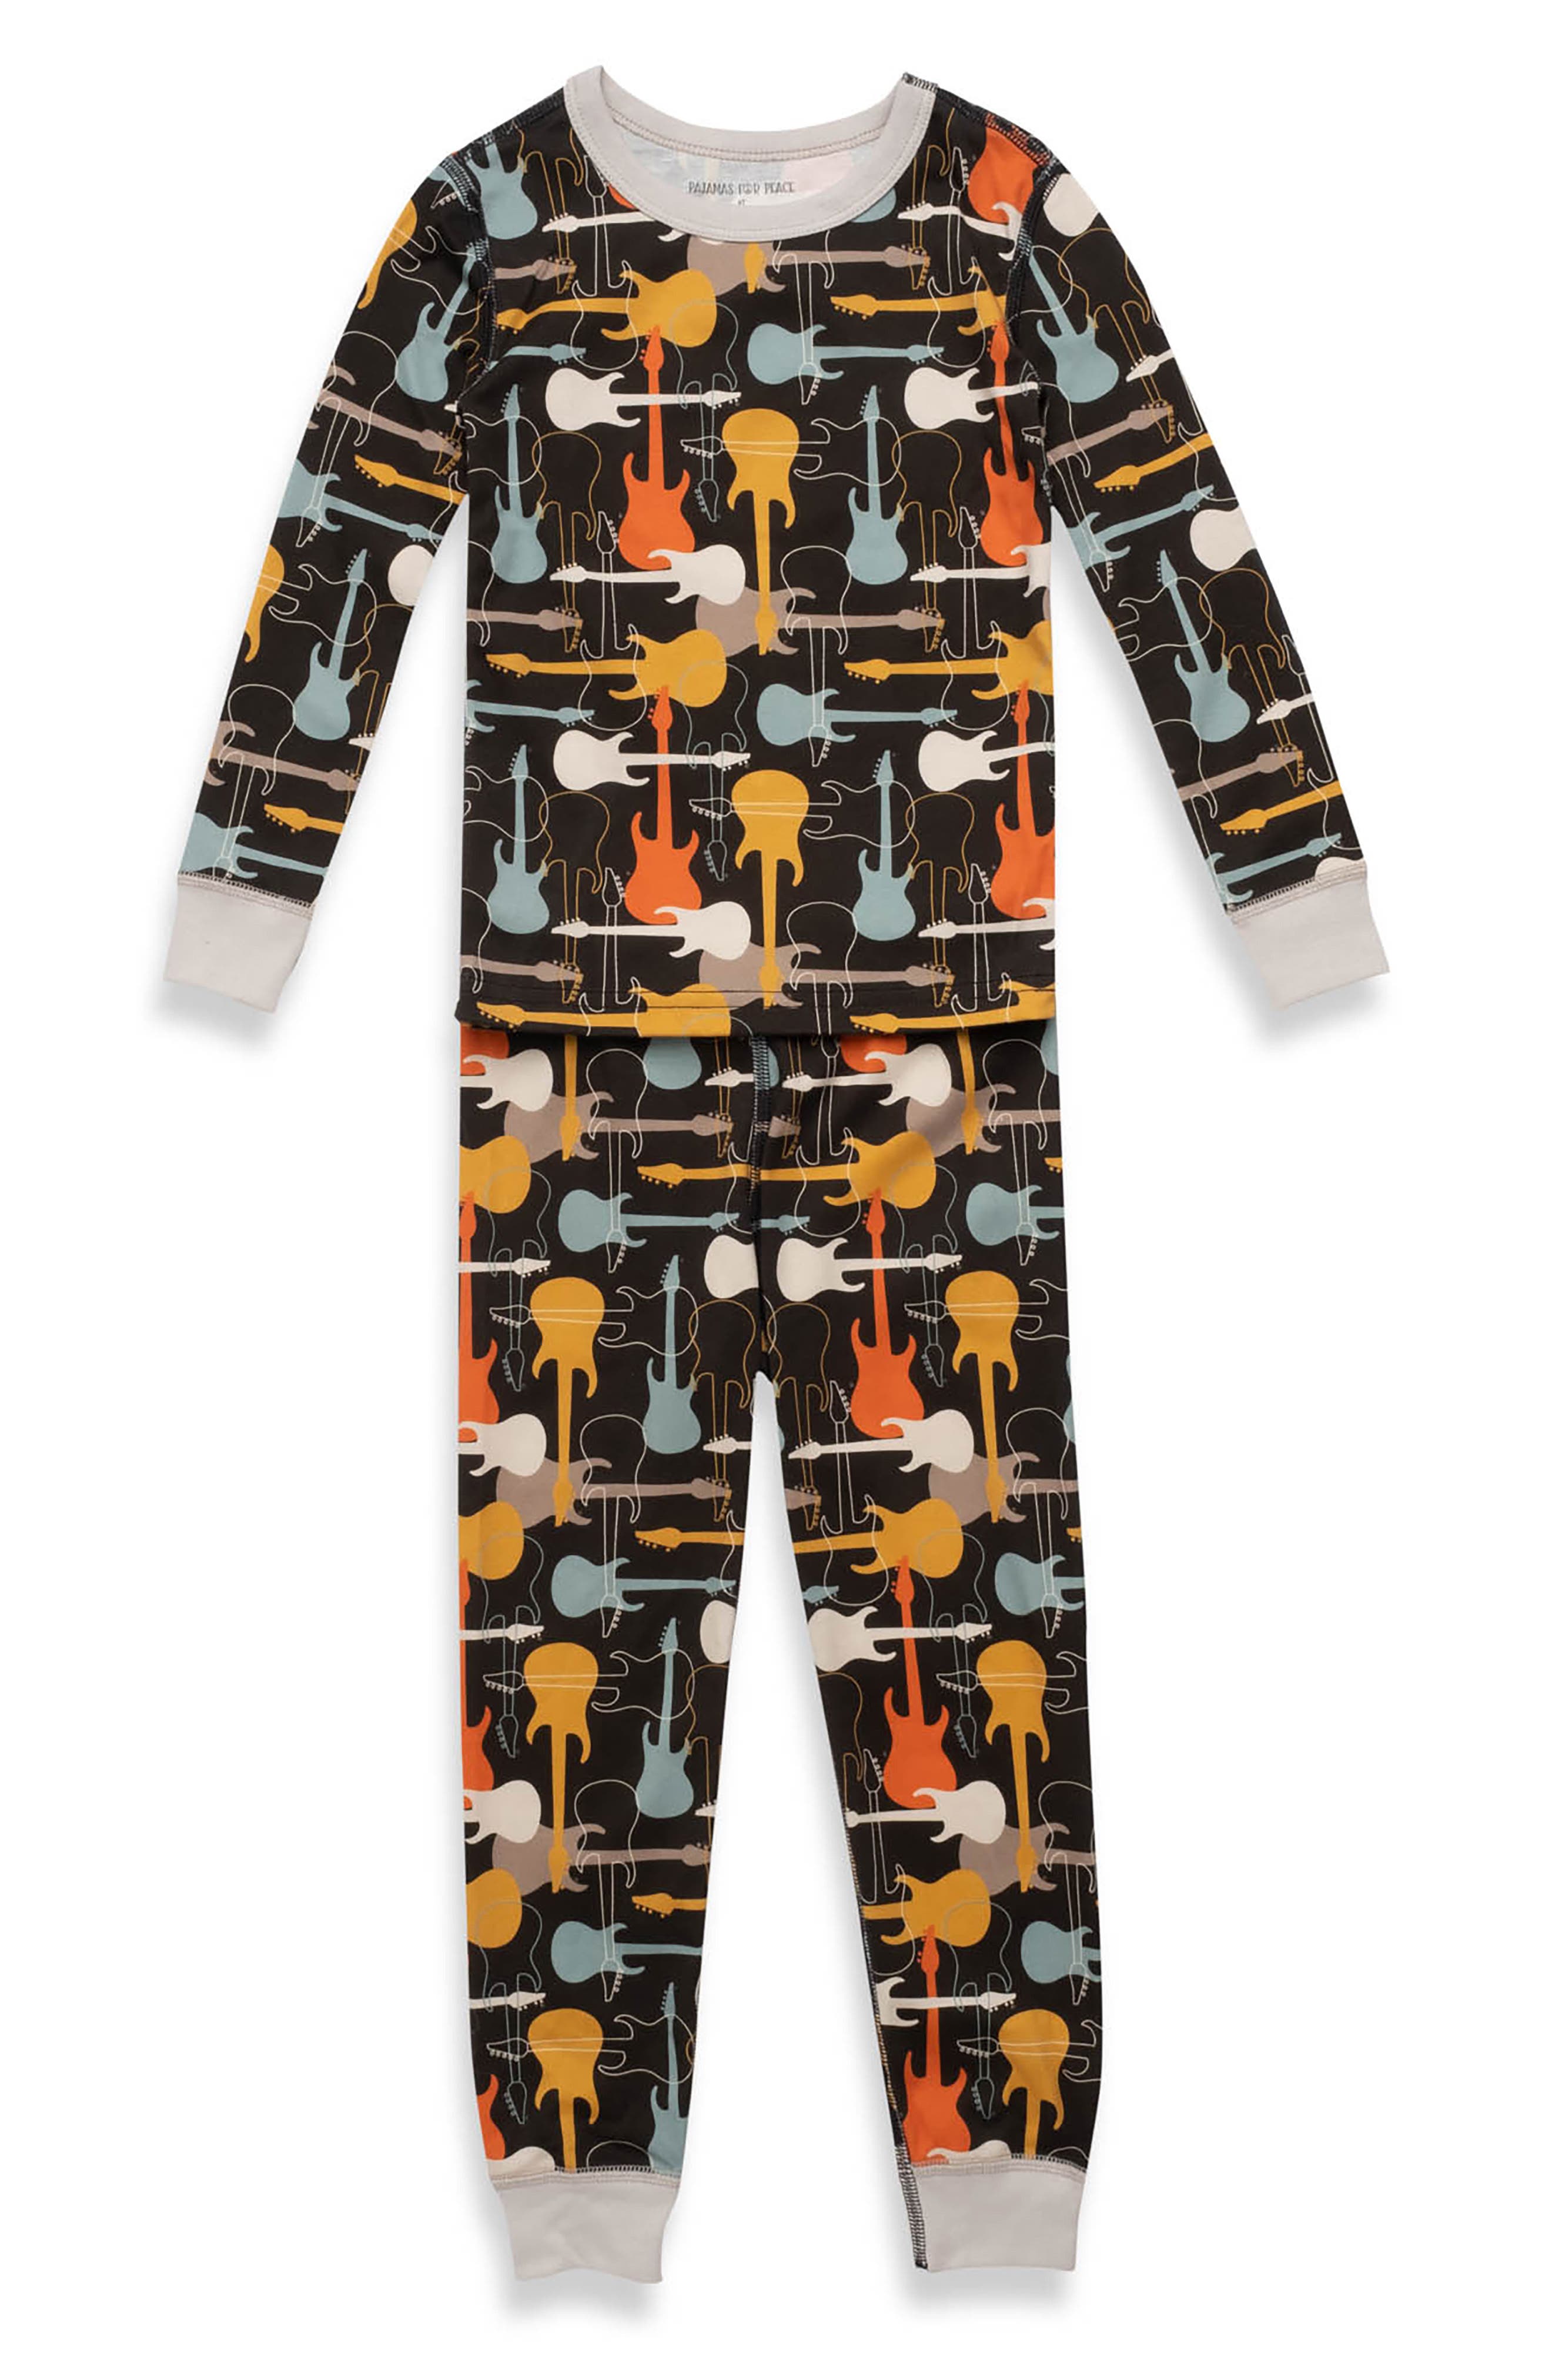 Tucker Tate Print One-Piece fleece Pajamas size large 18 months 